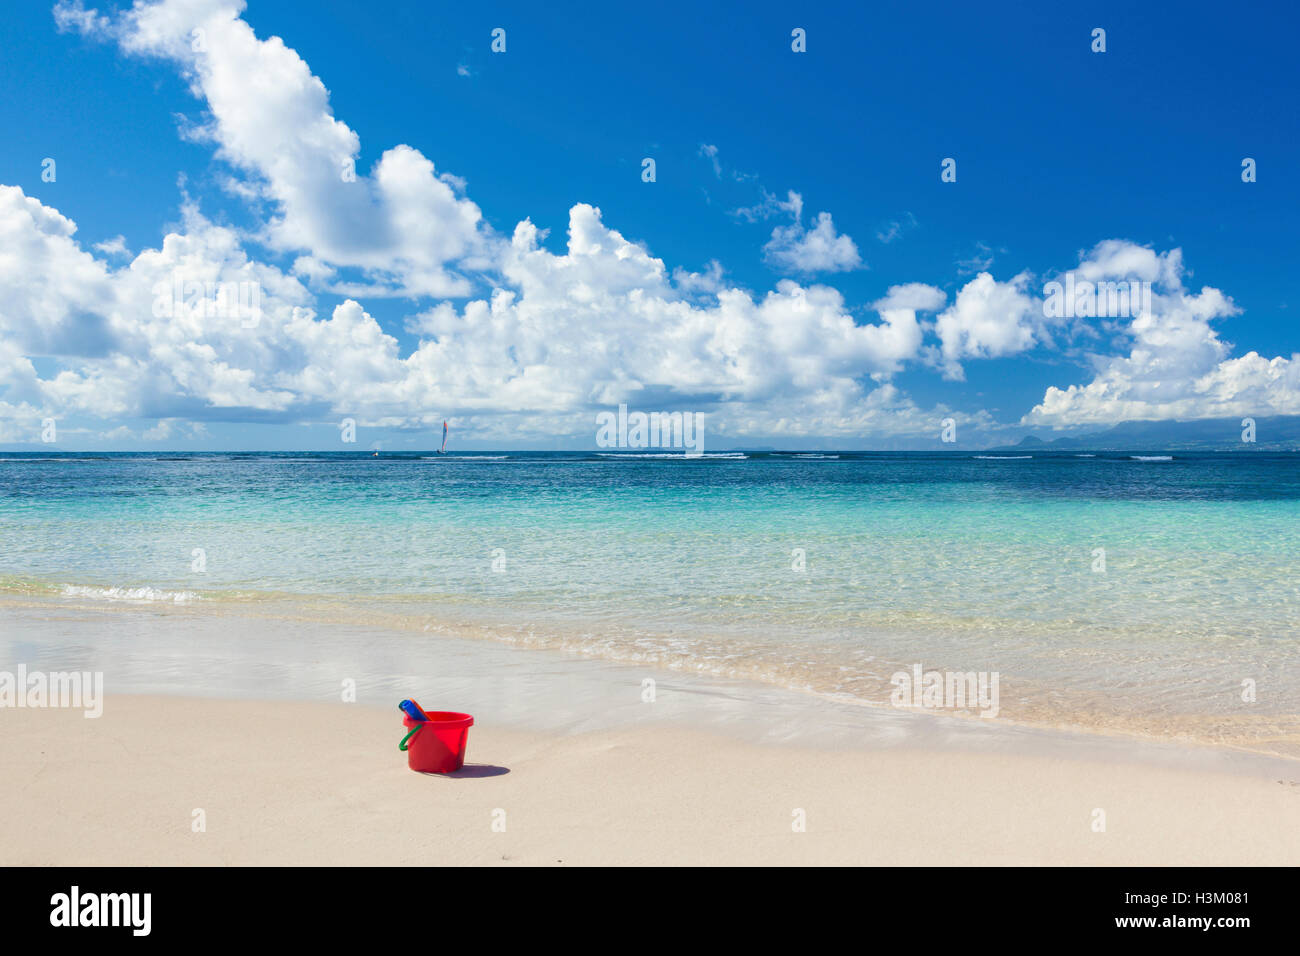 Sand bucket at Caribbean Sea beach Stock Photo